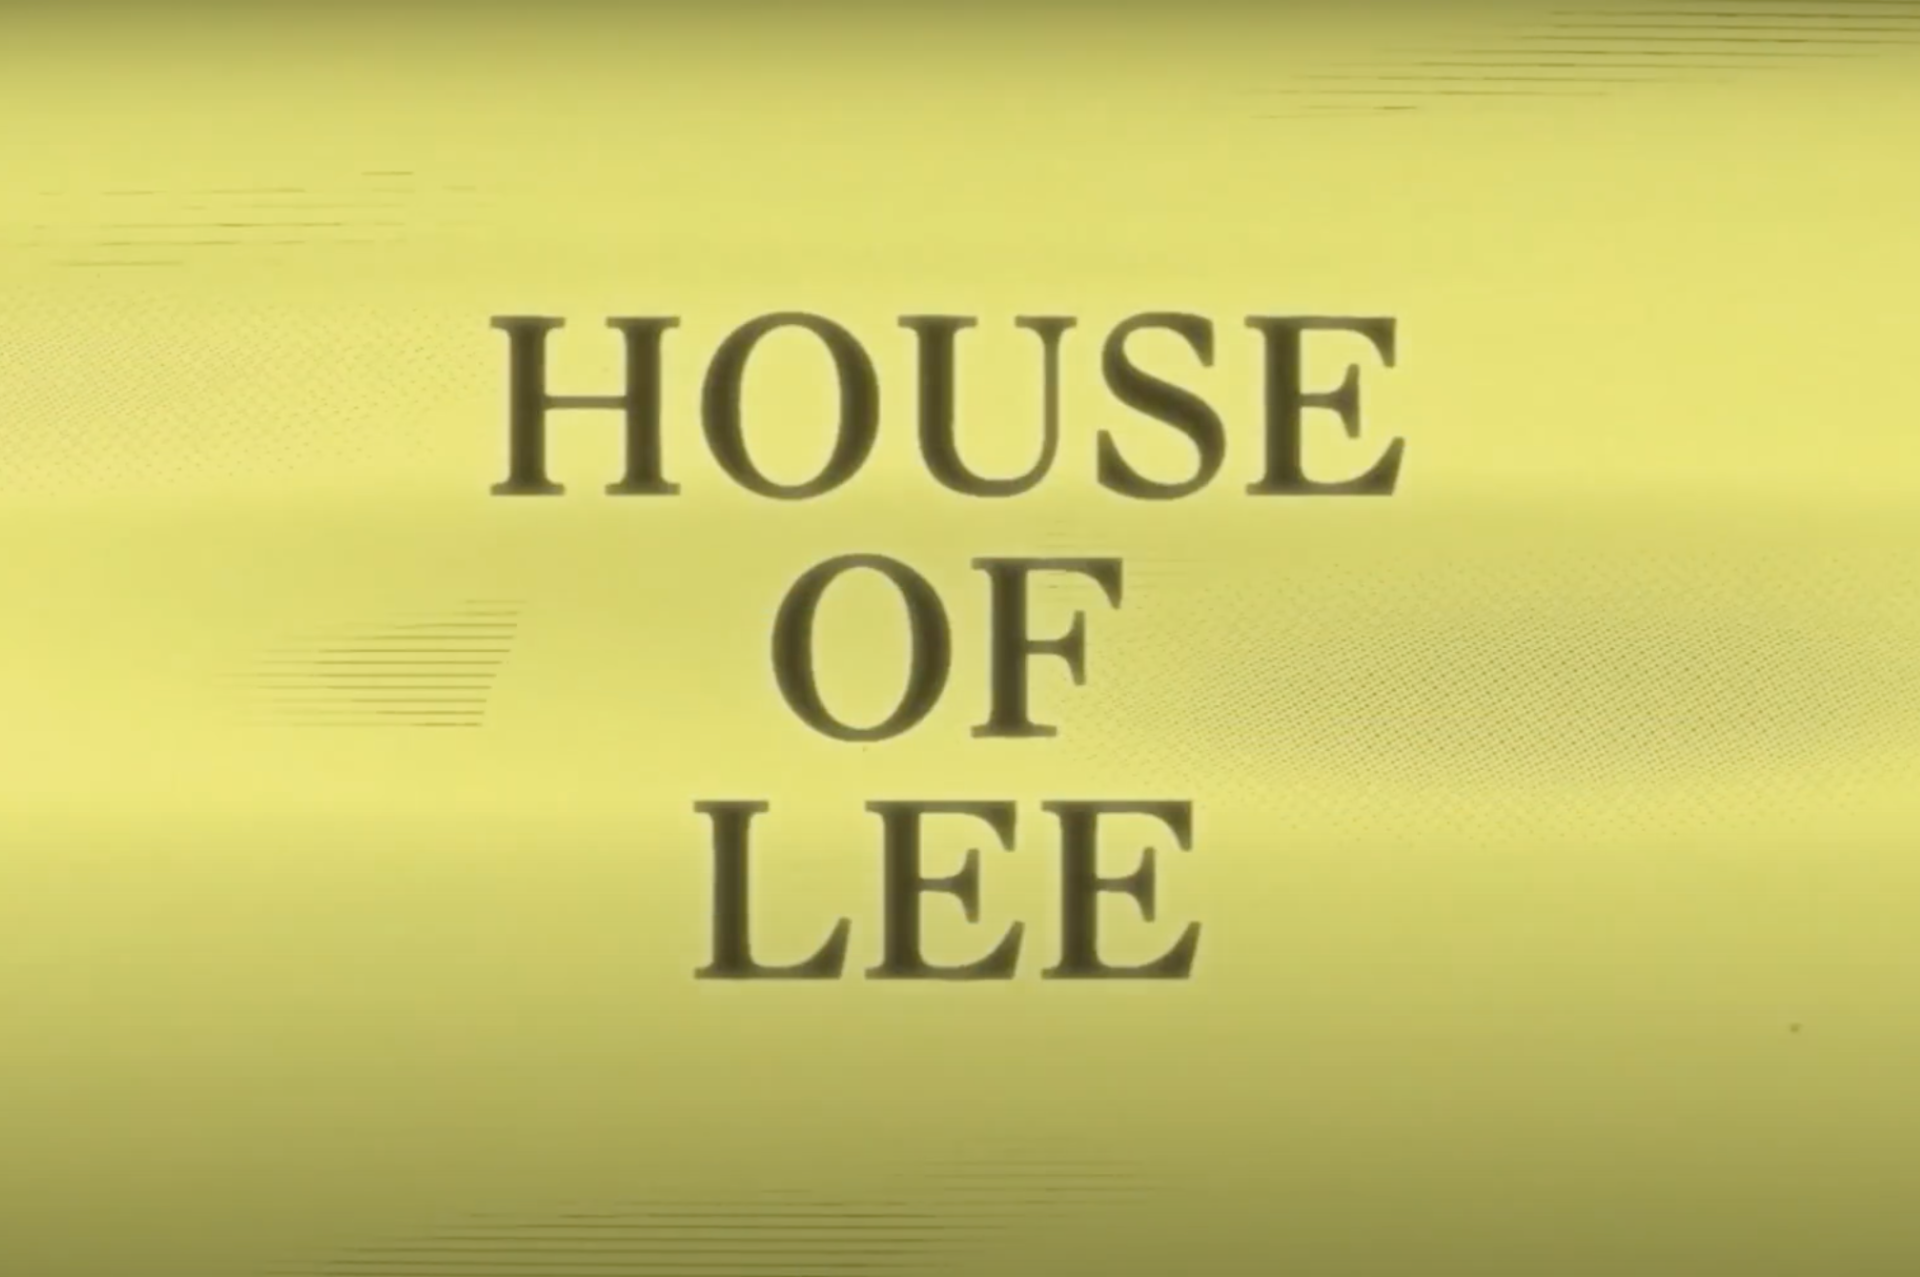 Bruce Lee regresa en forma de anime: ¡Prepárate para "House of Lee"!